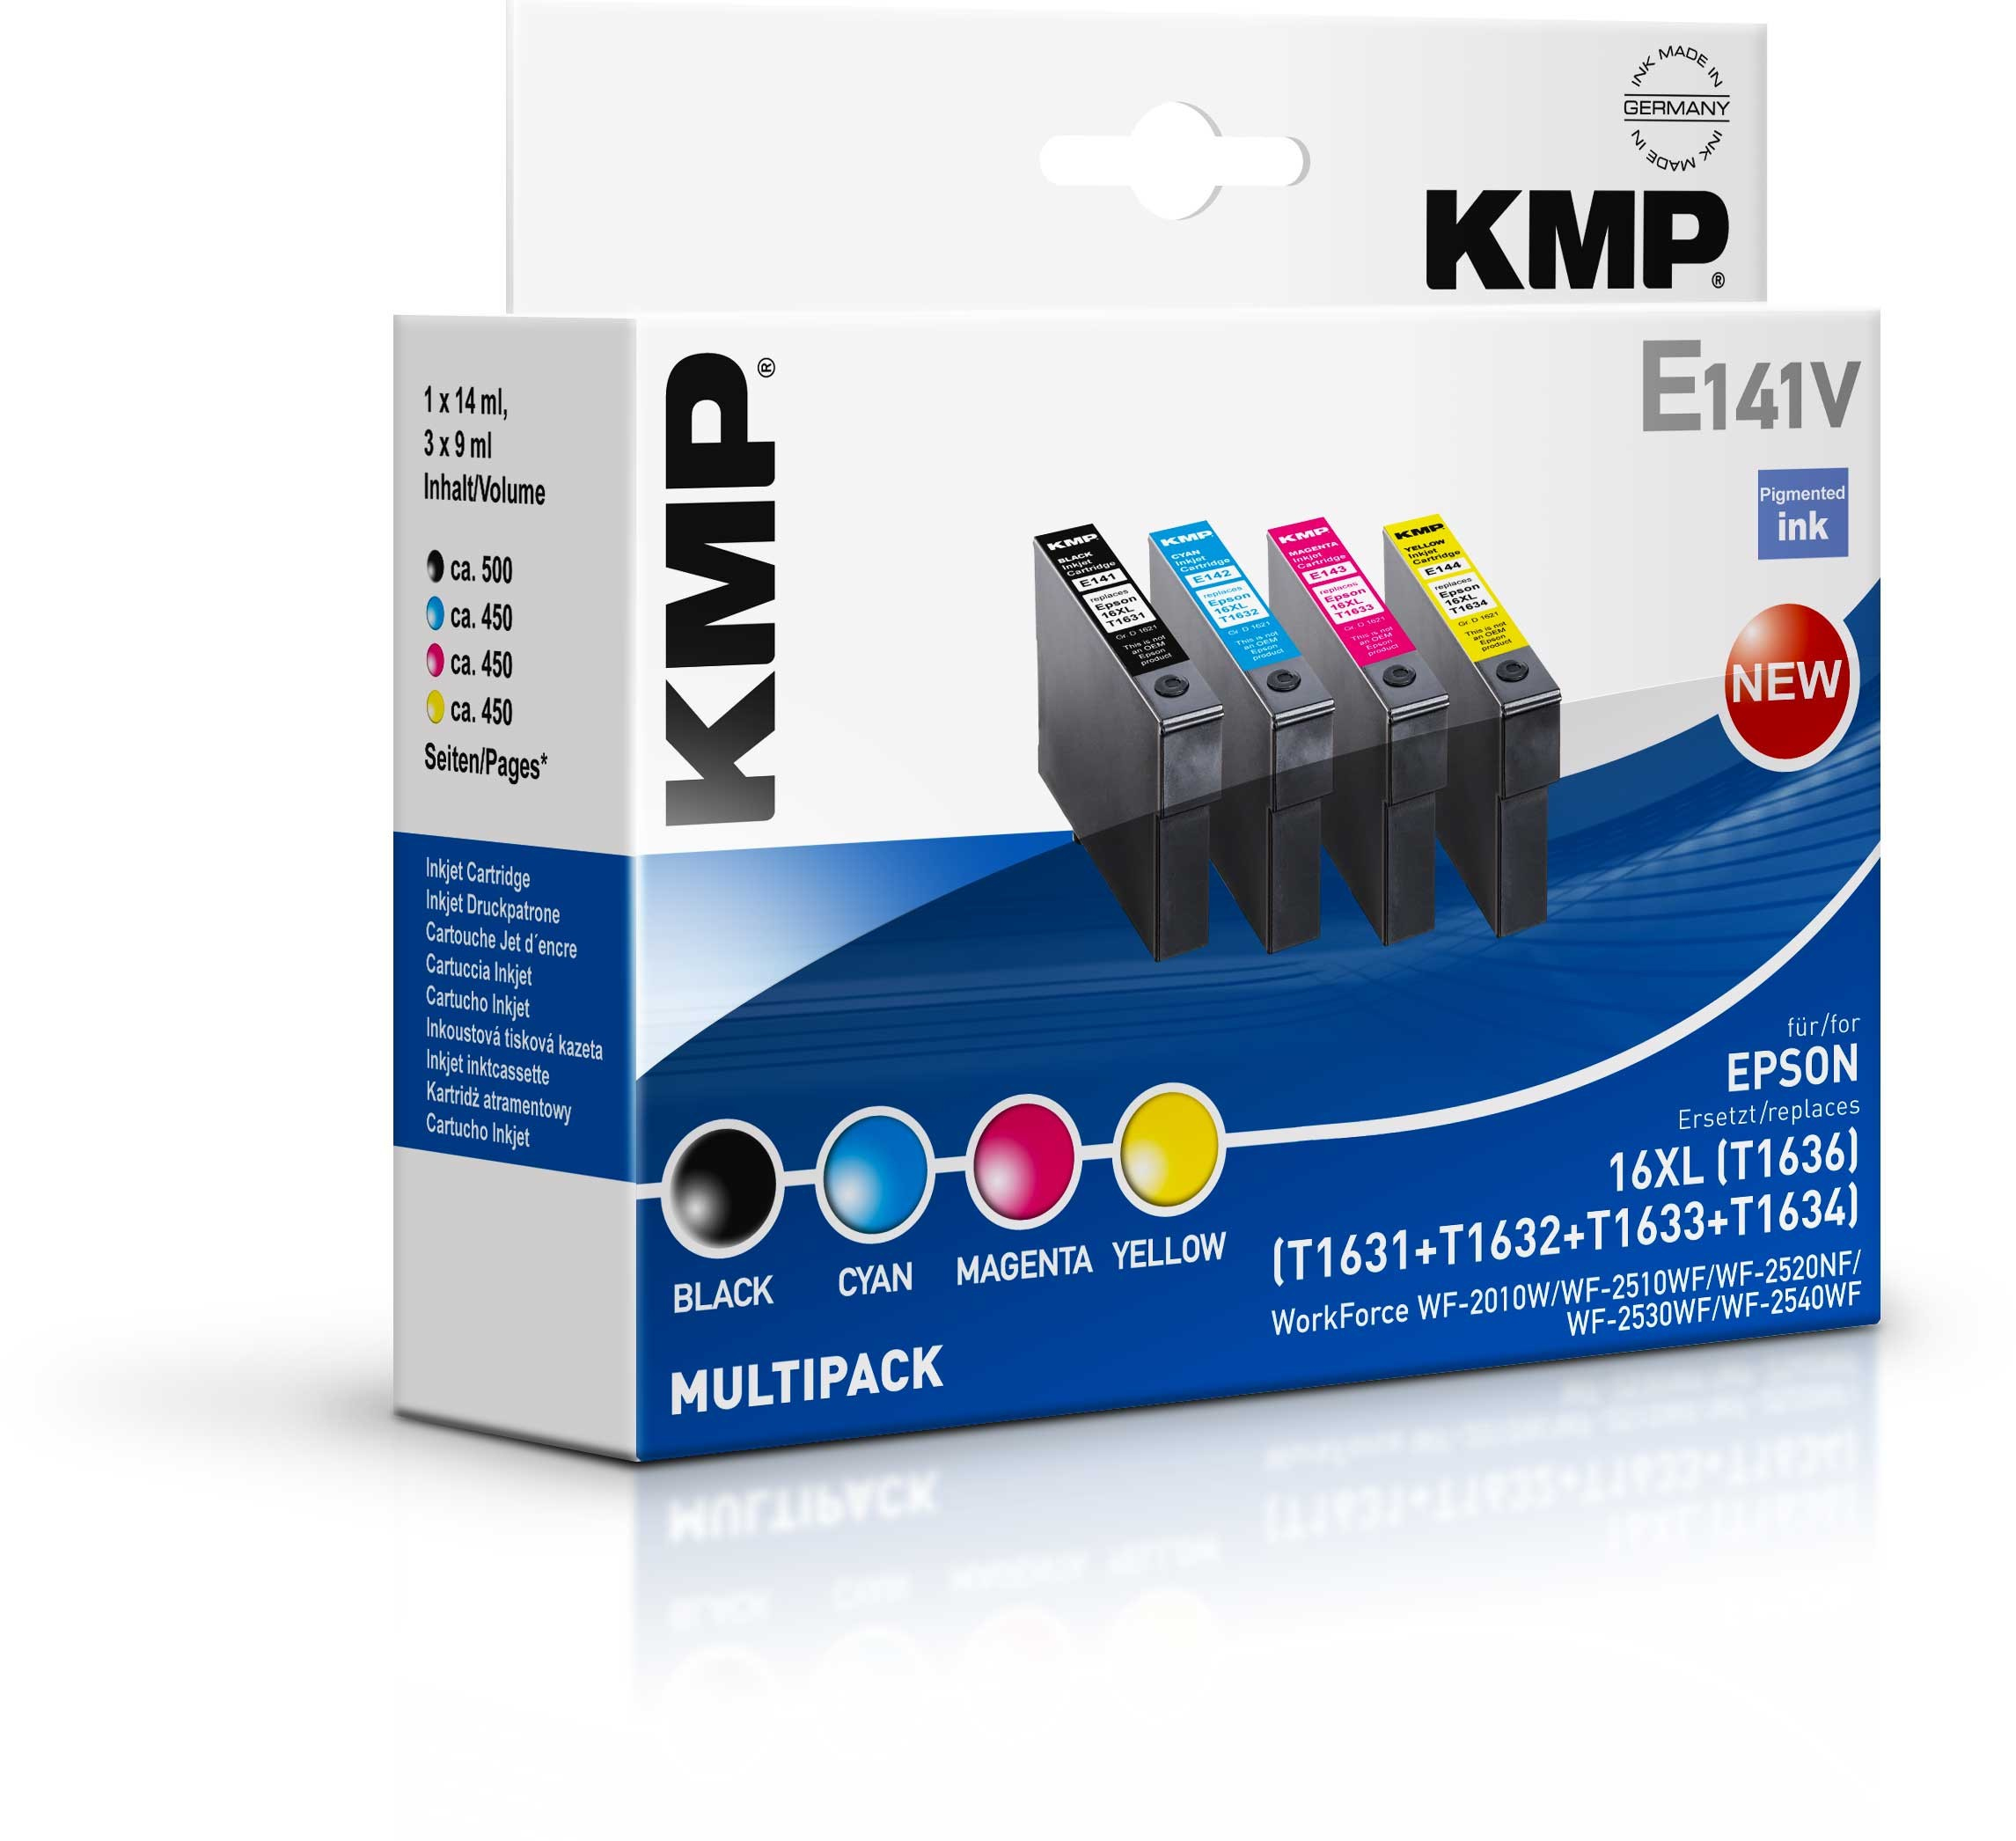 KMP E141V multi pack / cyaan, geel, magenta, zwart